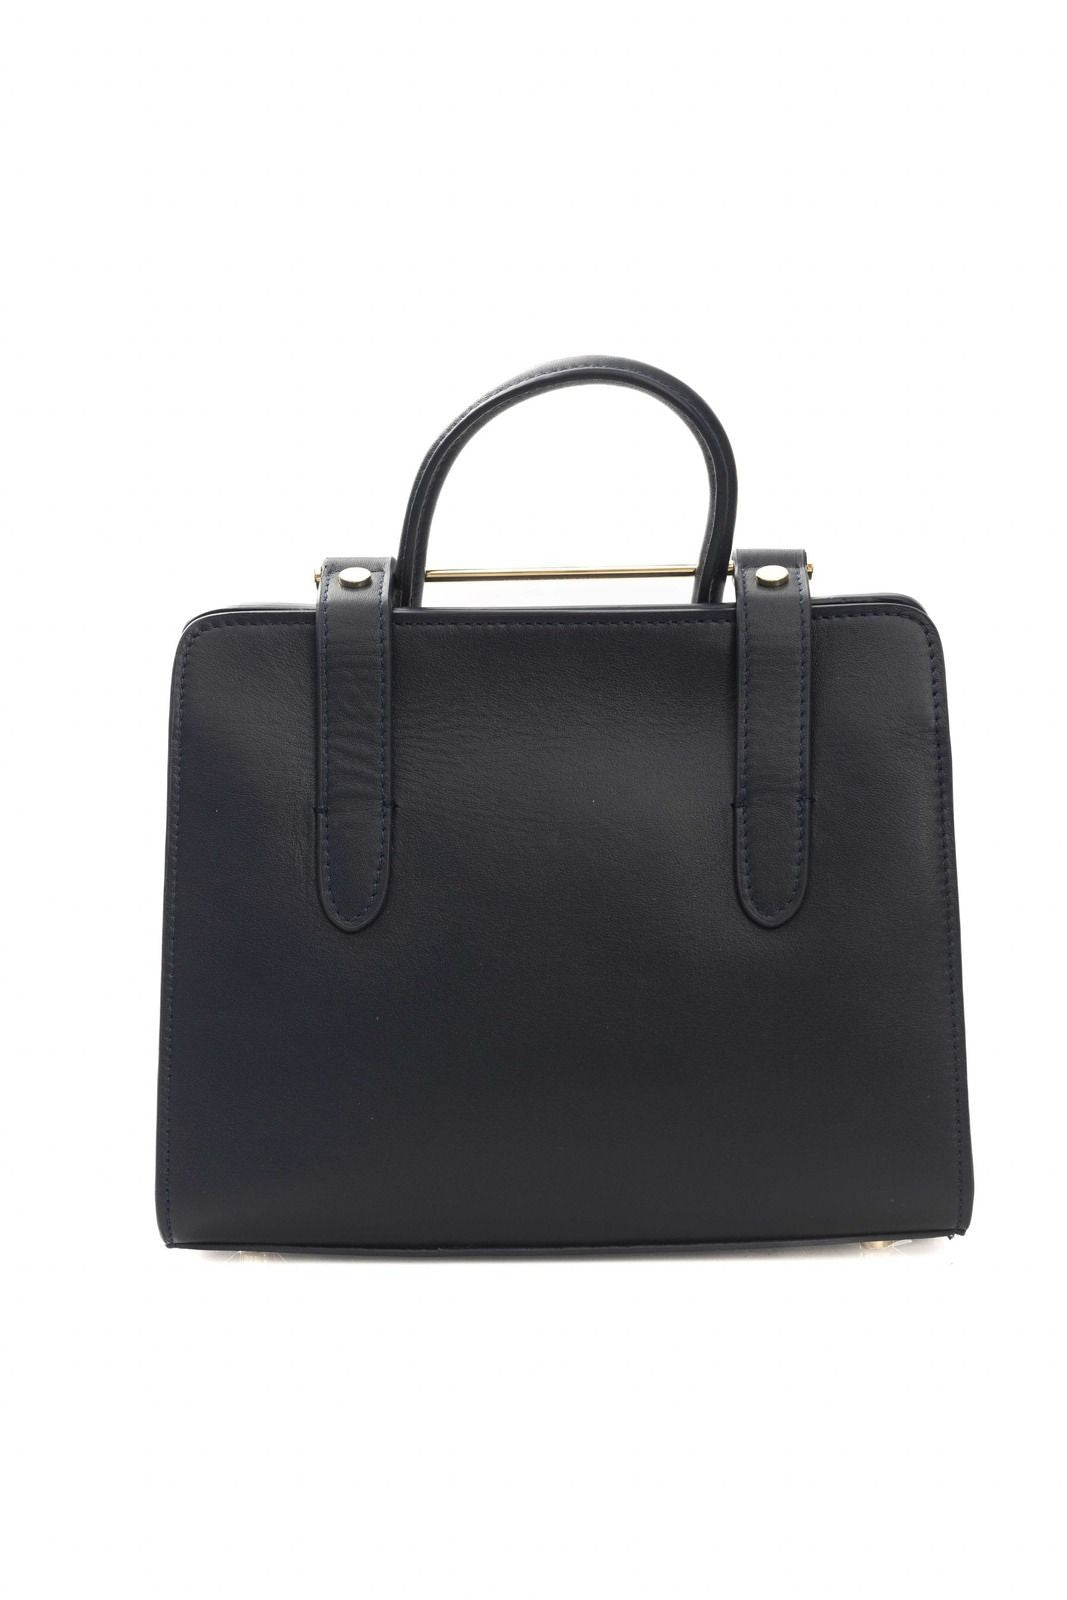 Cerruti 1881 Handbags For Women CEBA04274M